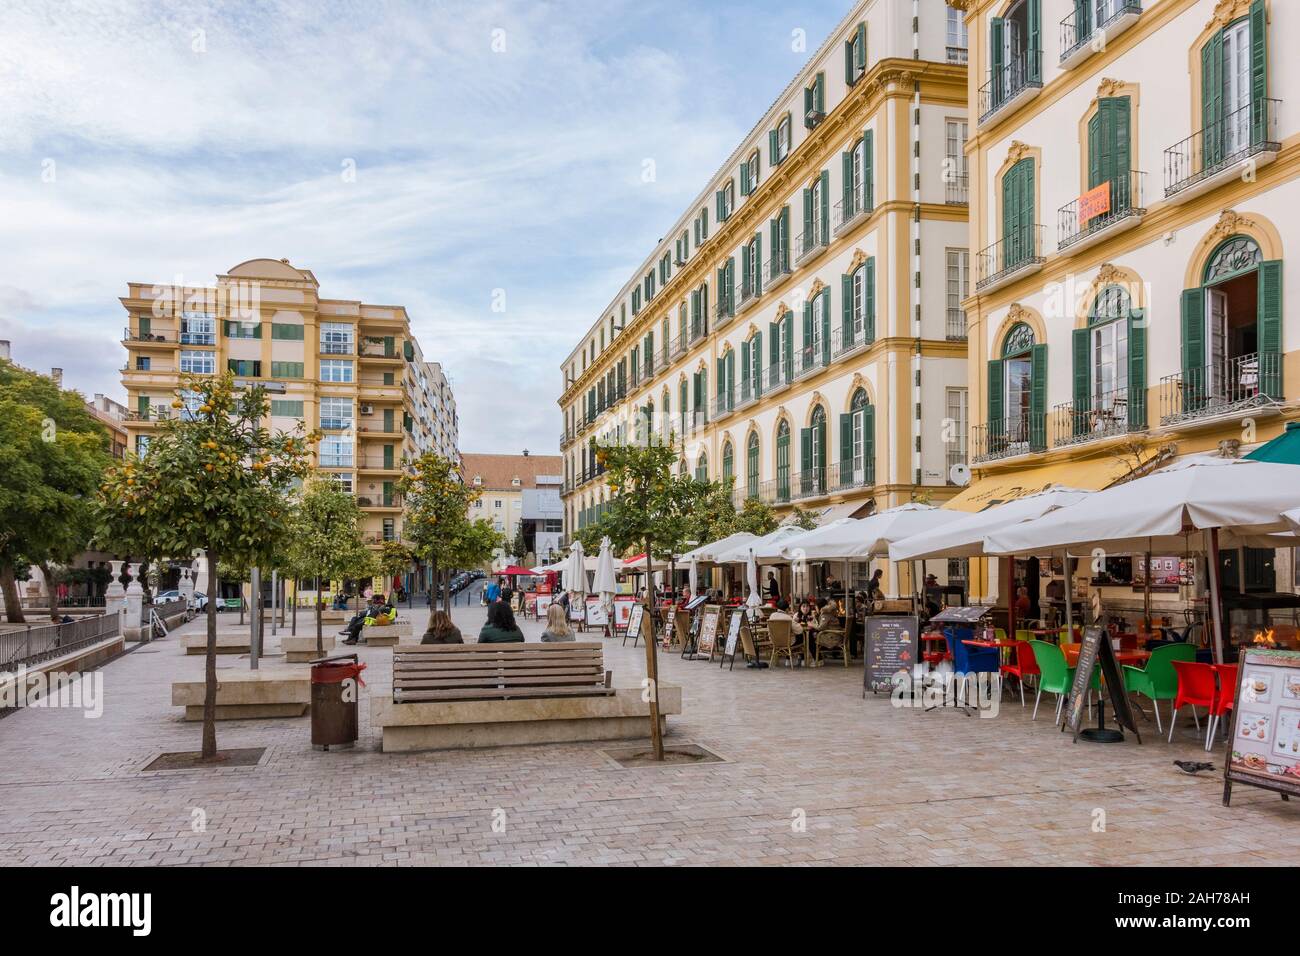 Plaza de la Merced (Mercy Square) bars et cafés, restaurants, place, plaza, Malaga, Espagne. Banque D'Images